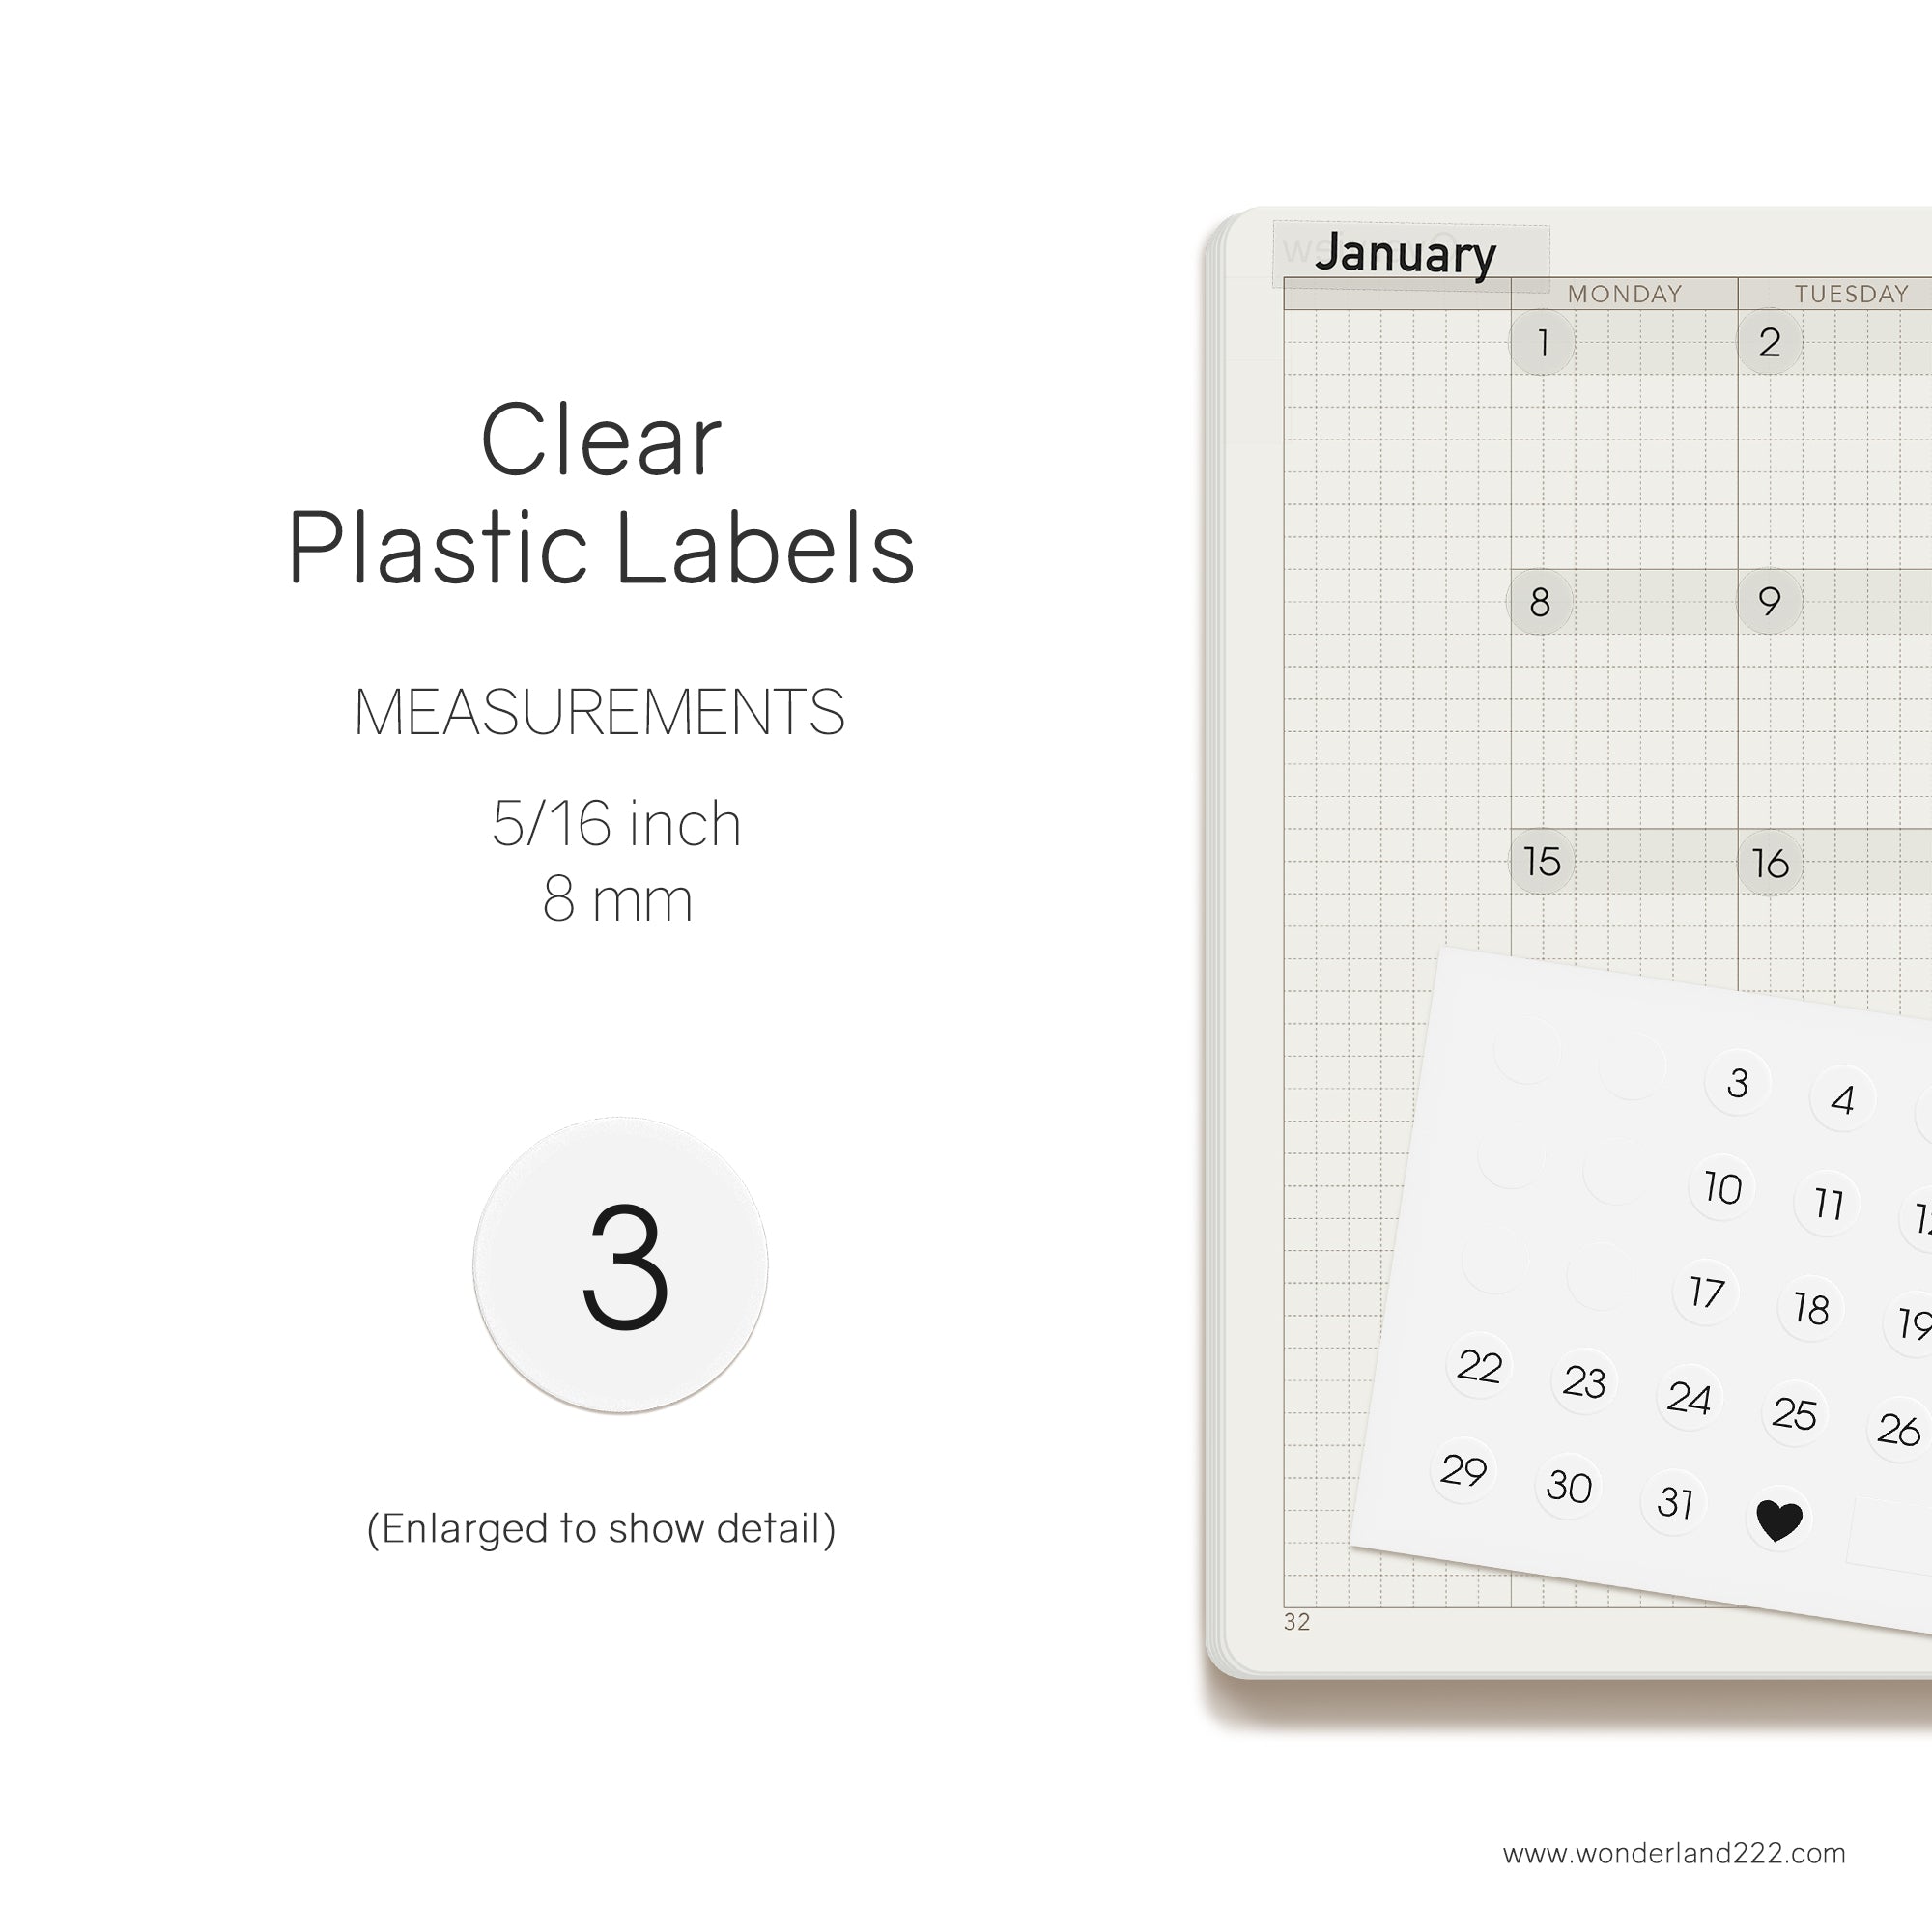 MiniJoy Calendar Clear Plastic (12 Transparent Sheets)